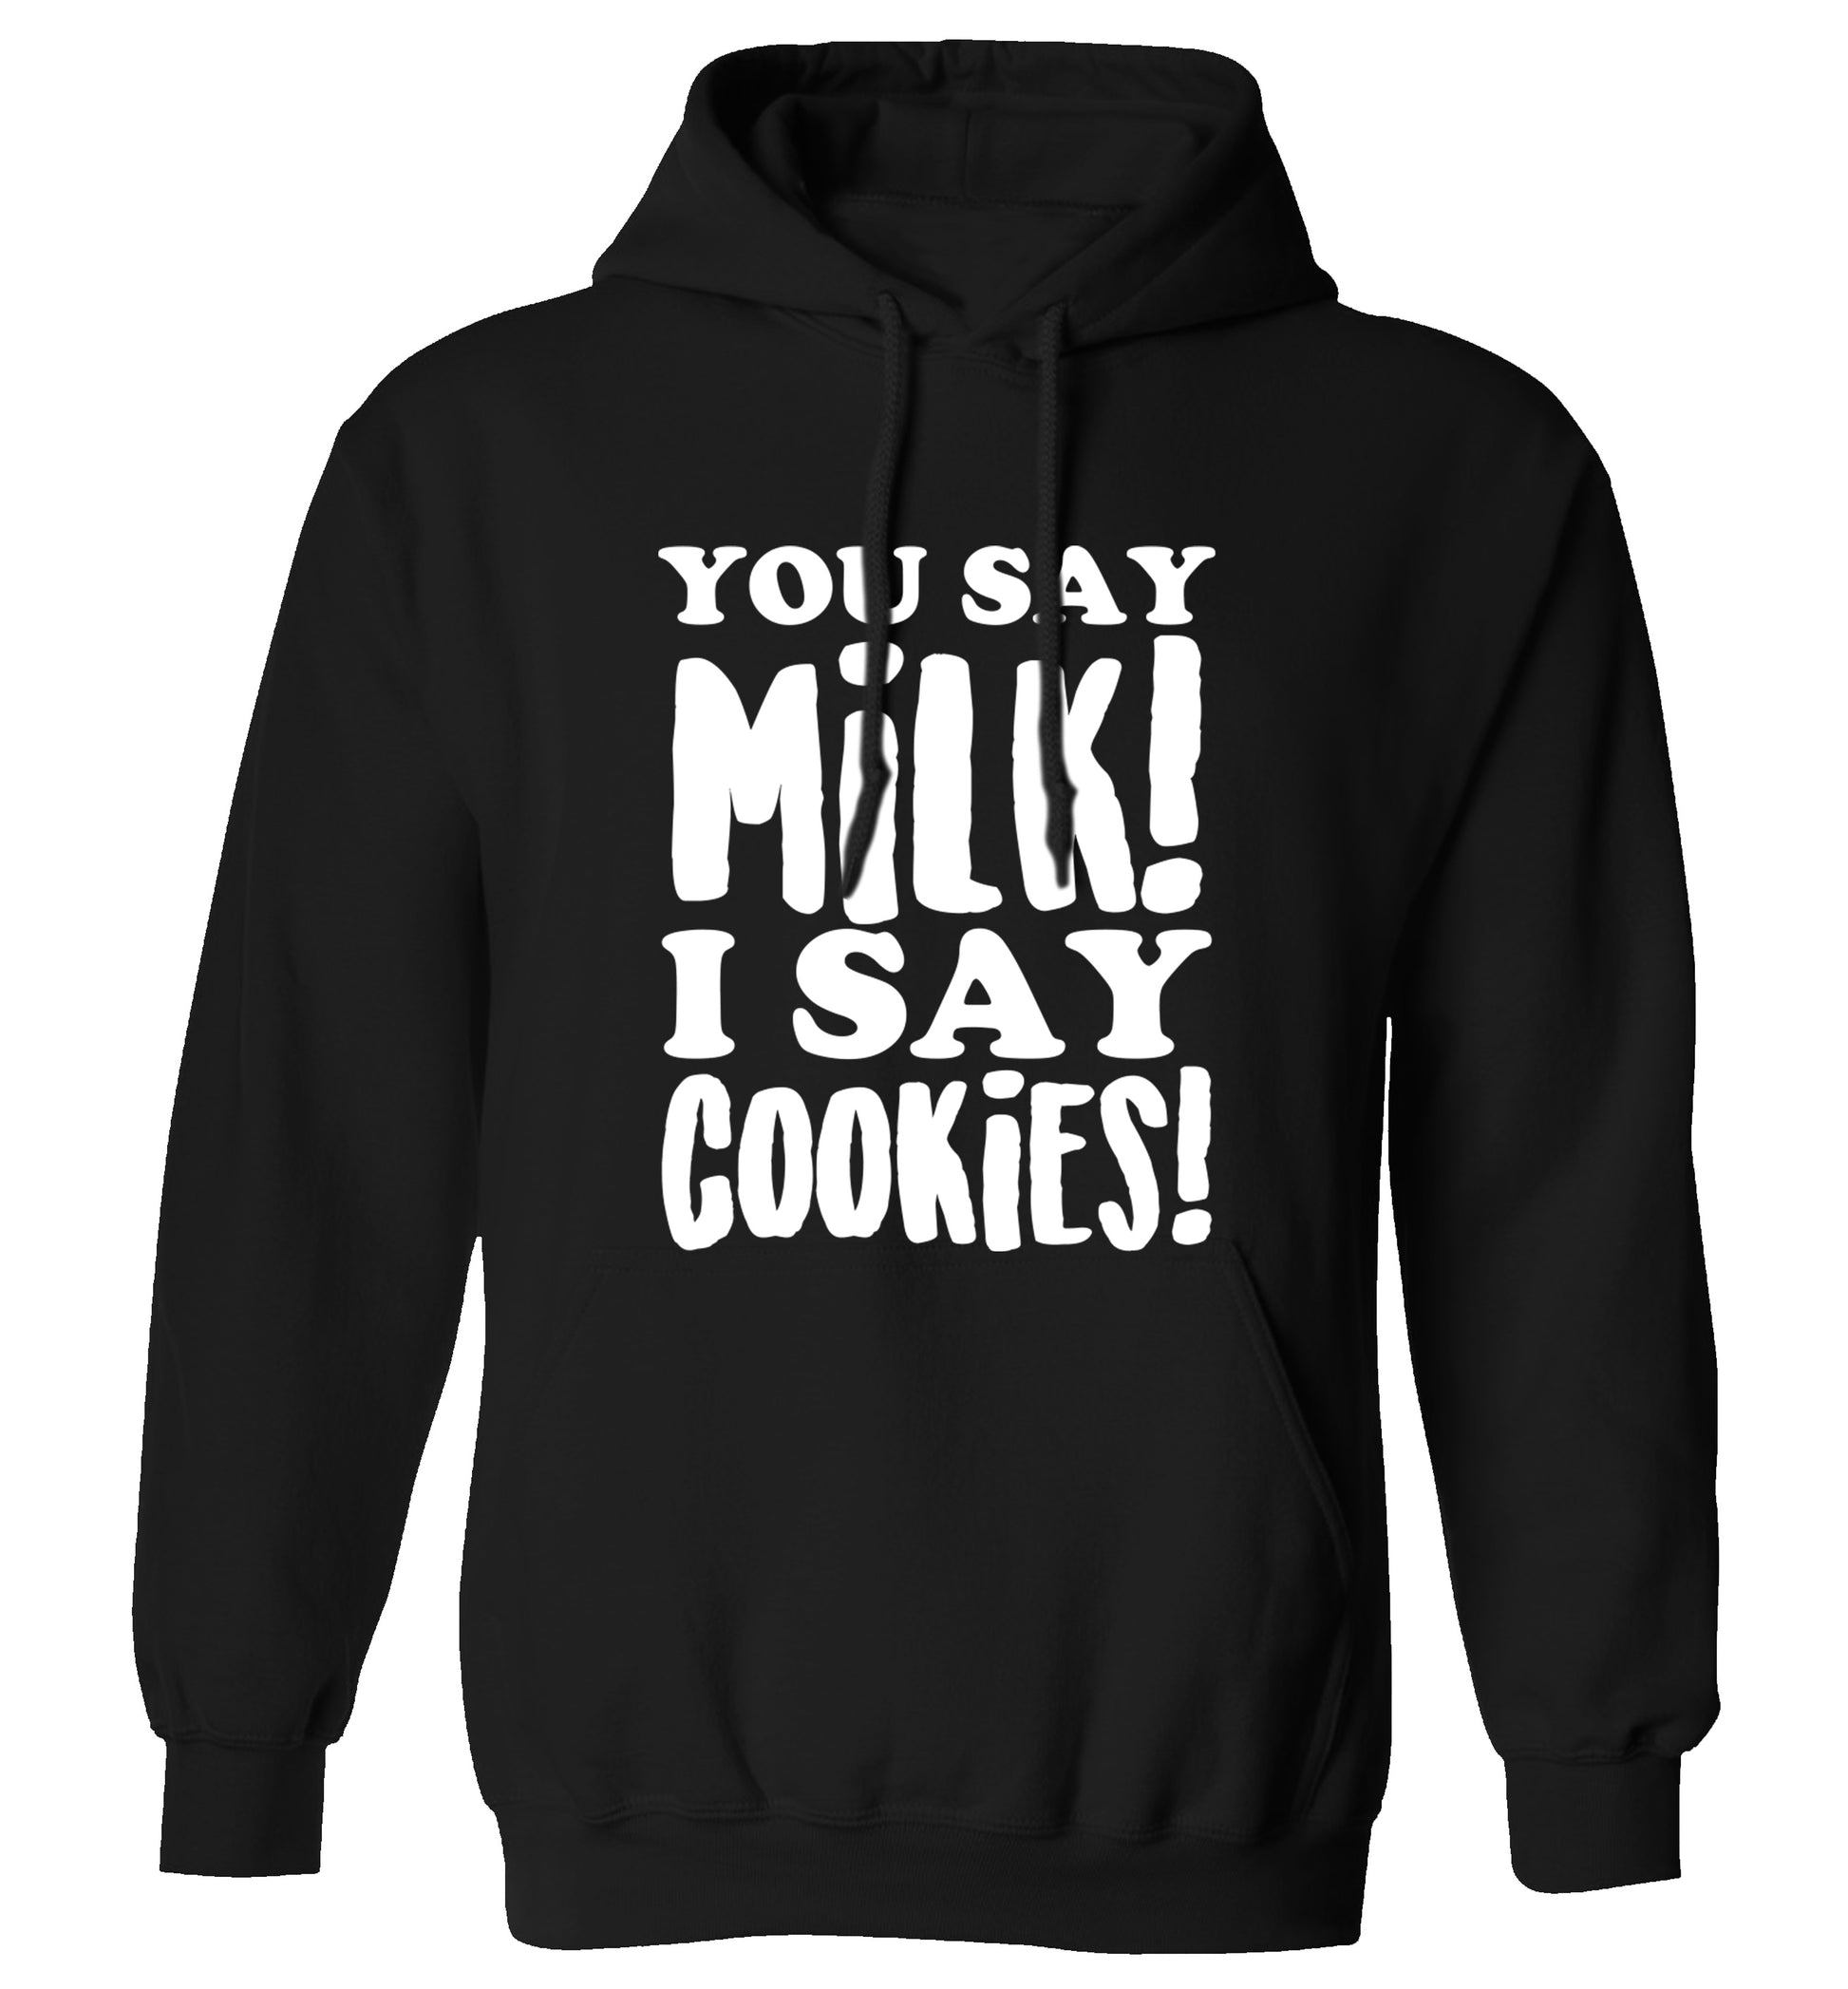 You say milk I say cookies! adults unisex black hoodie 2XL